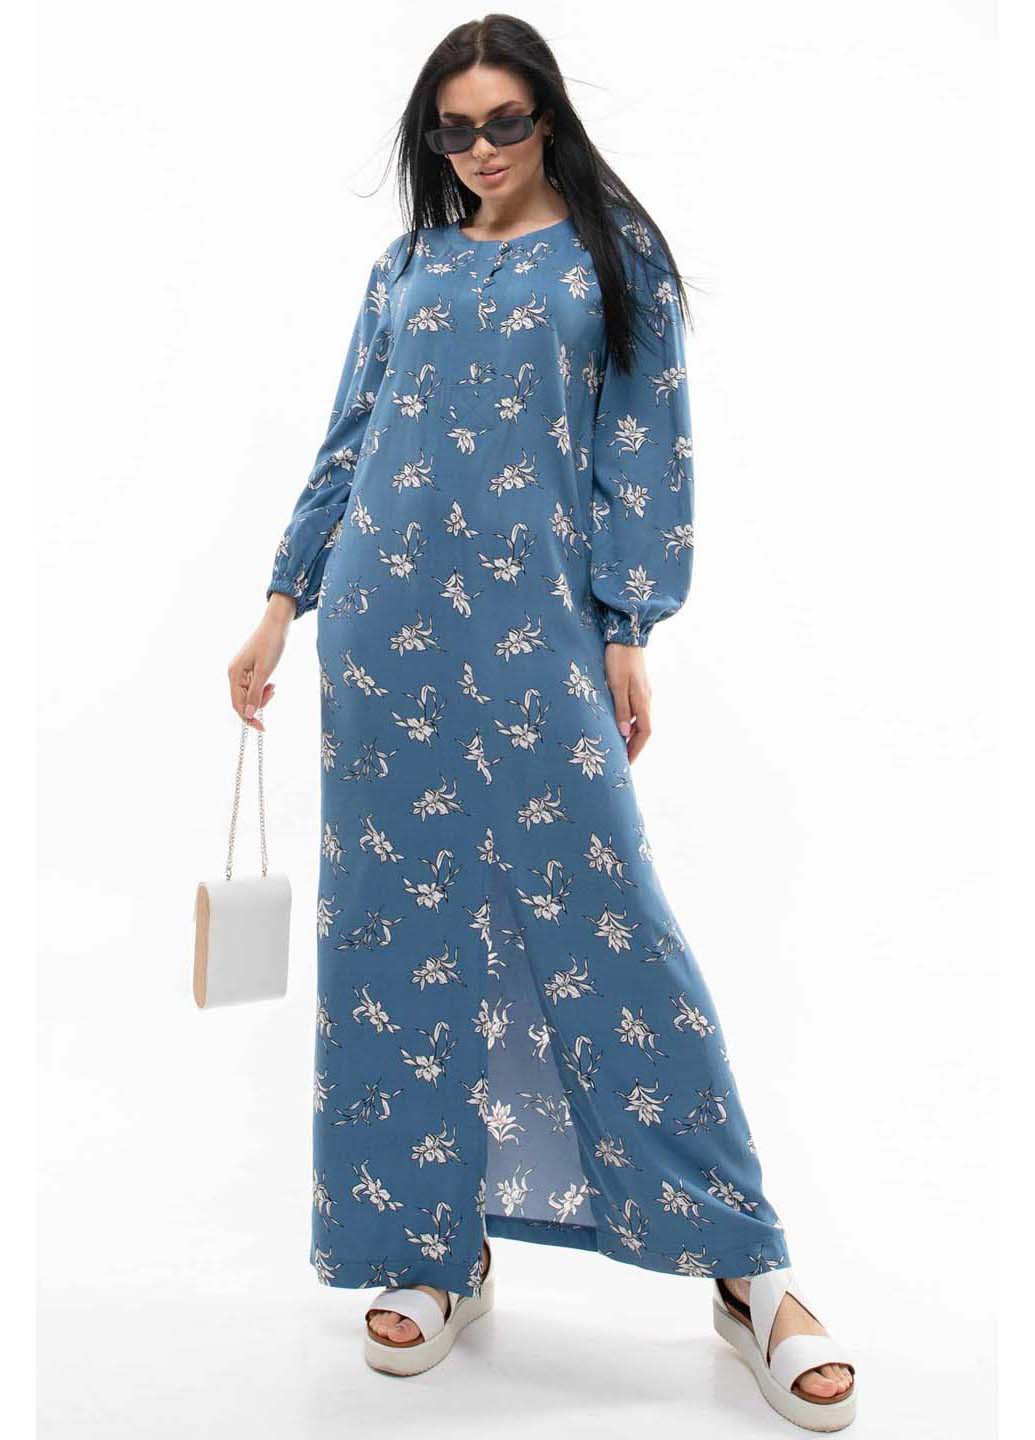 Синее кэжуал платье Ри Мари